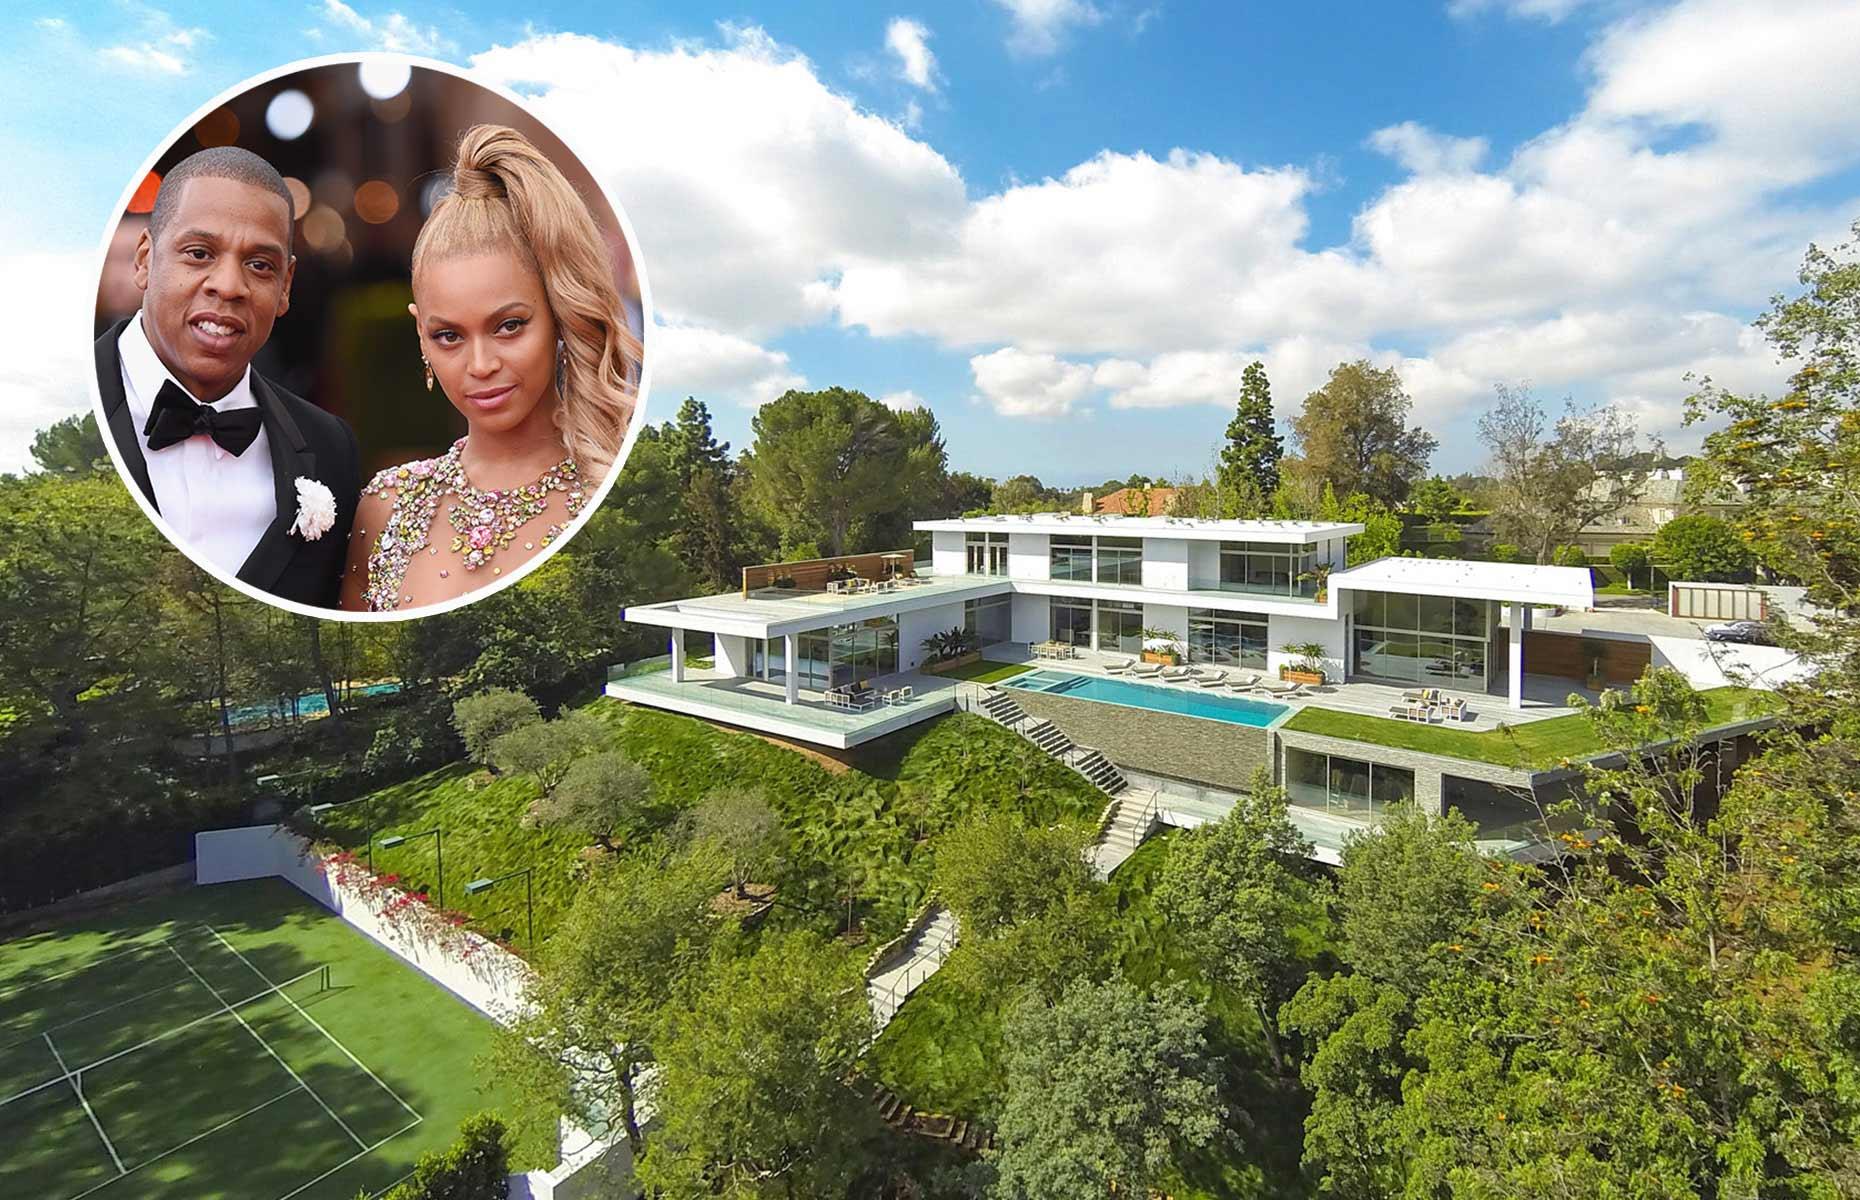 READ MORE: Beyoncé and Jay-Z's incredible property portfolio